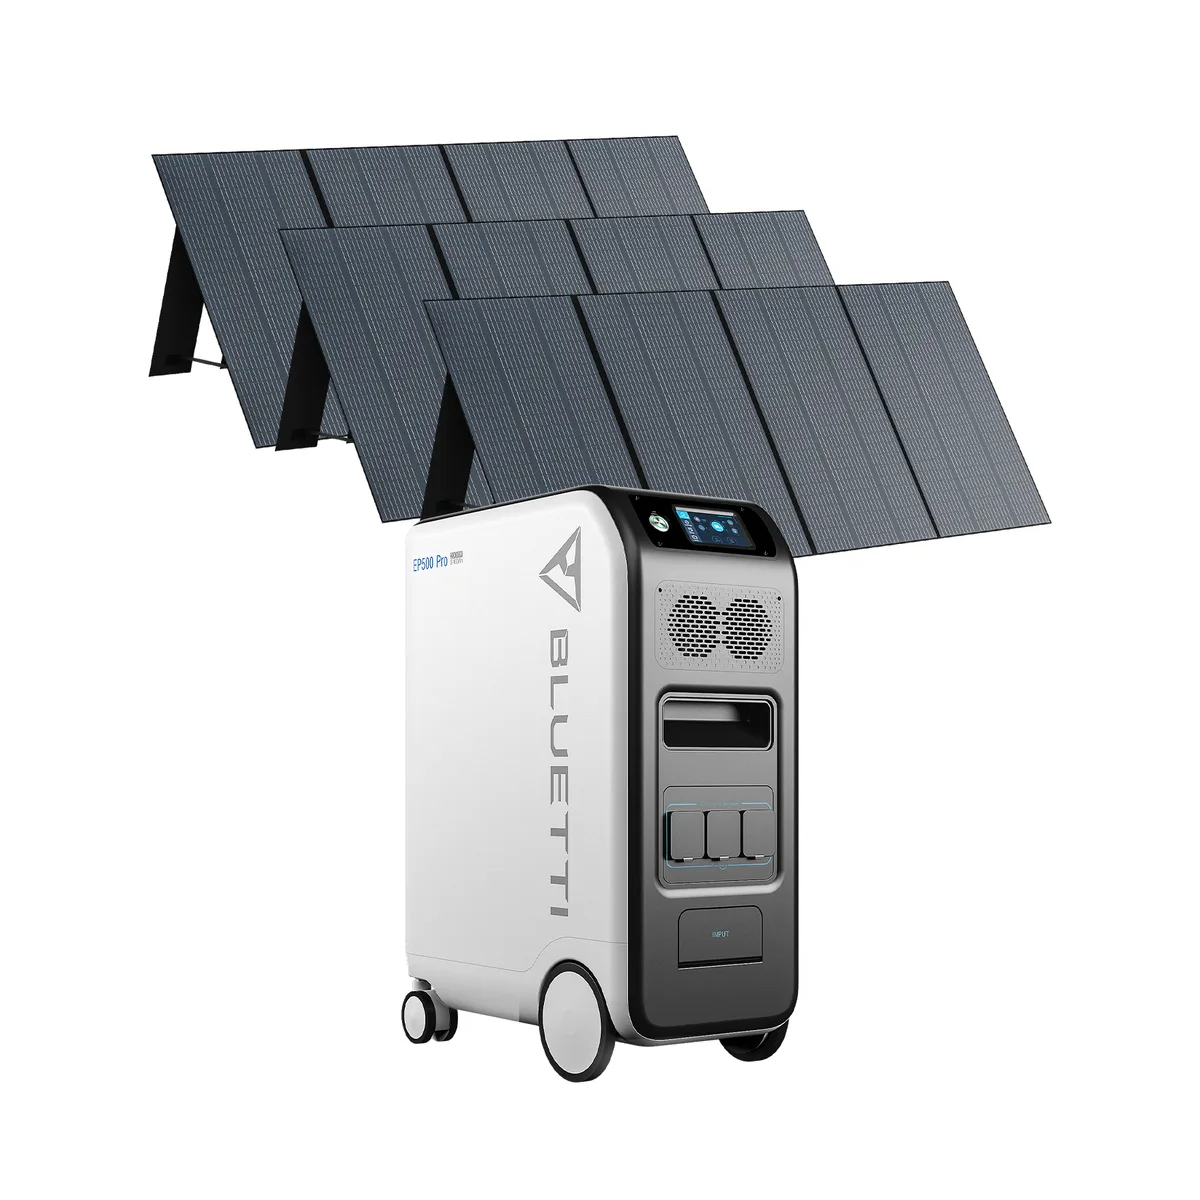 Schwarz Powerstation Solarmodule EP500PRO Wh mit Faltbare 350W 5100 PV350 BLUETTI 3 Stromerzeuger